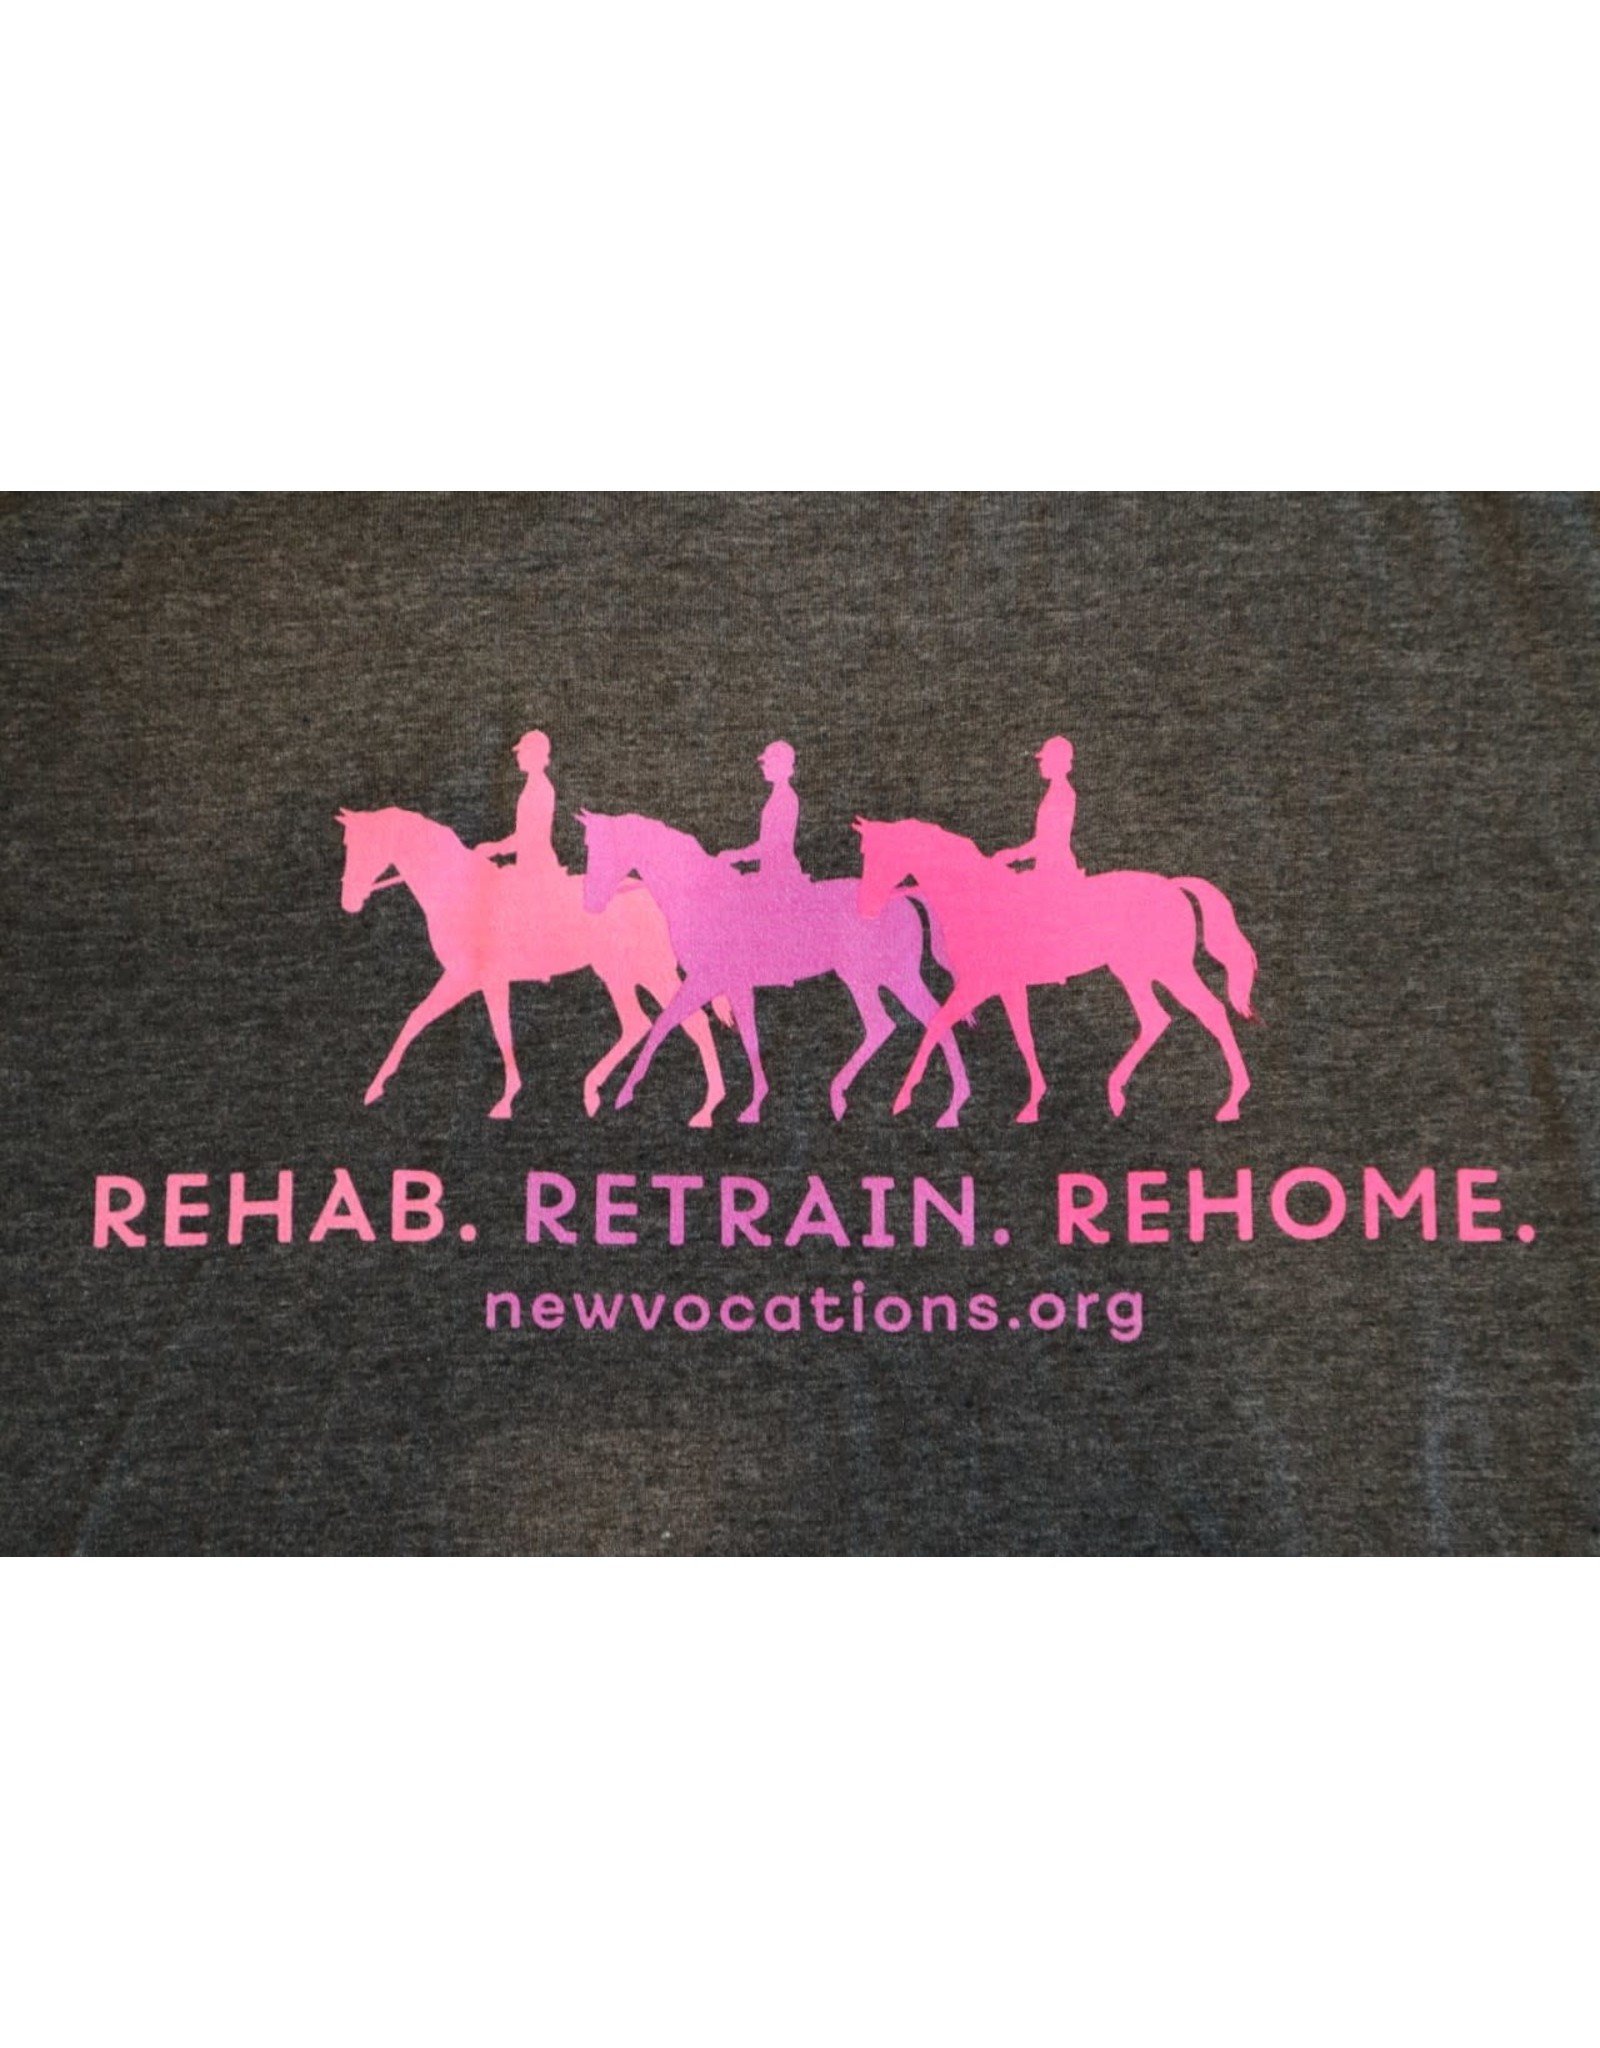 Dark Grey "Rehab. Retrain. Rehome." T-Shirts